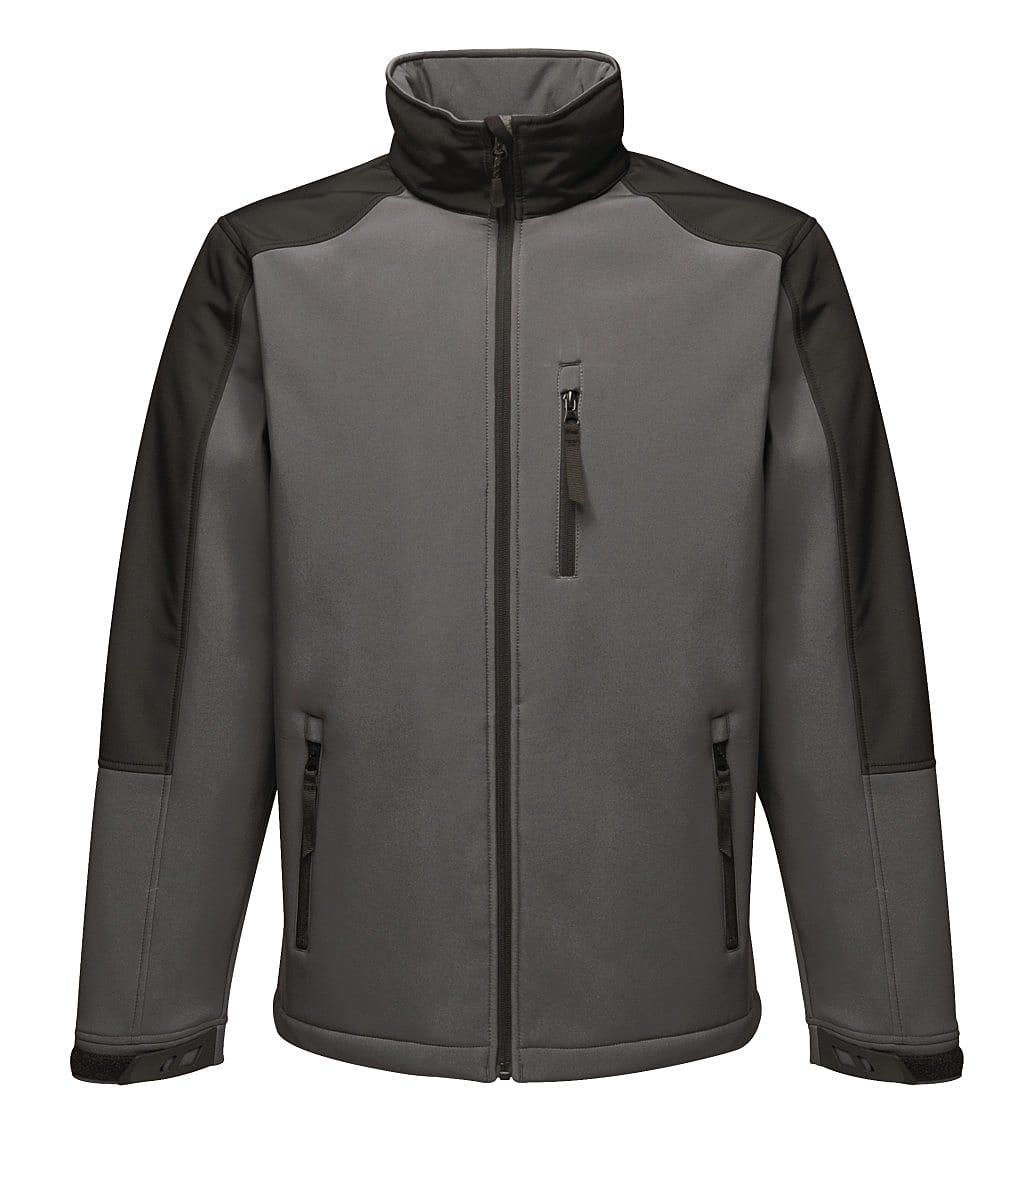 Regatta Hydroforce 3-layer Membrane Softshell Jacket in Seal Grey / Black (Product Code: TRA650)